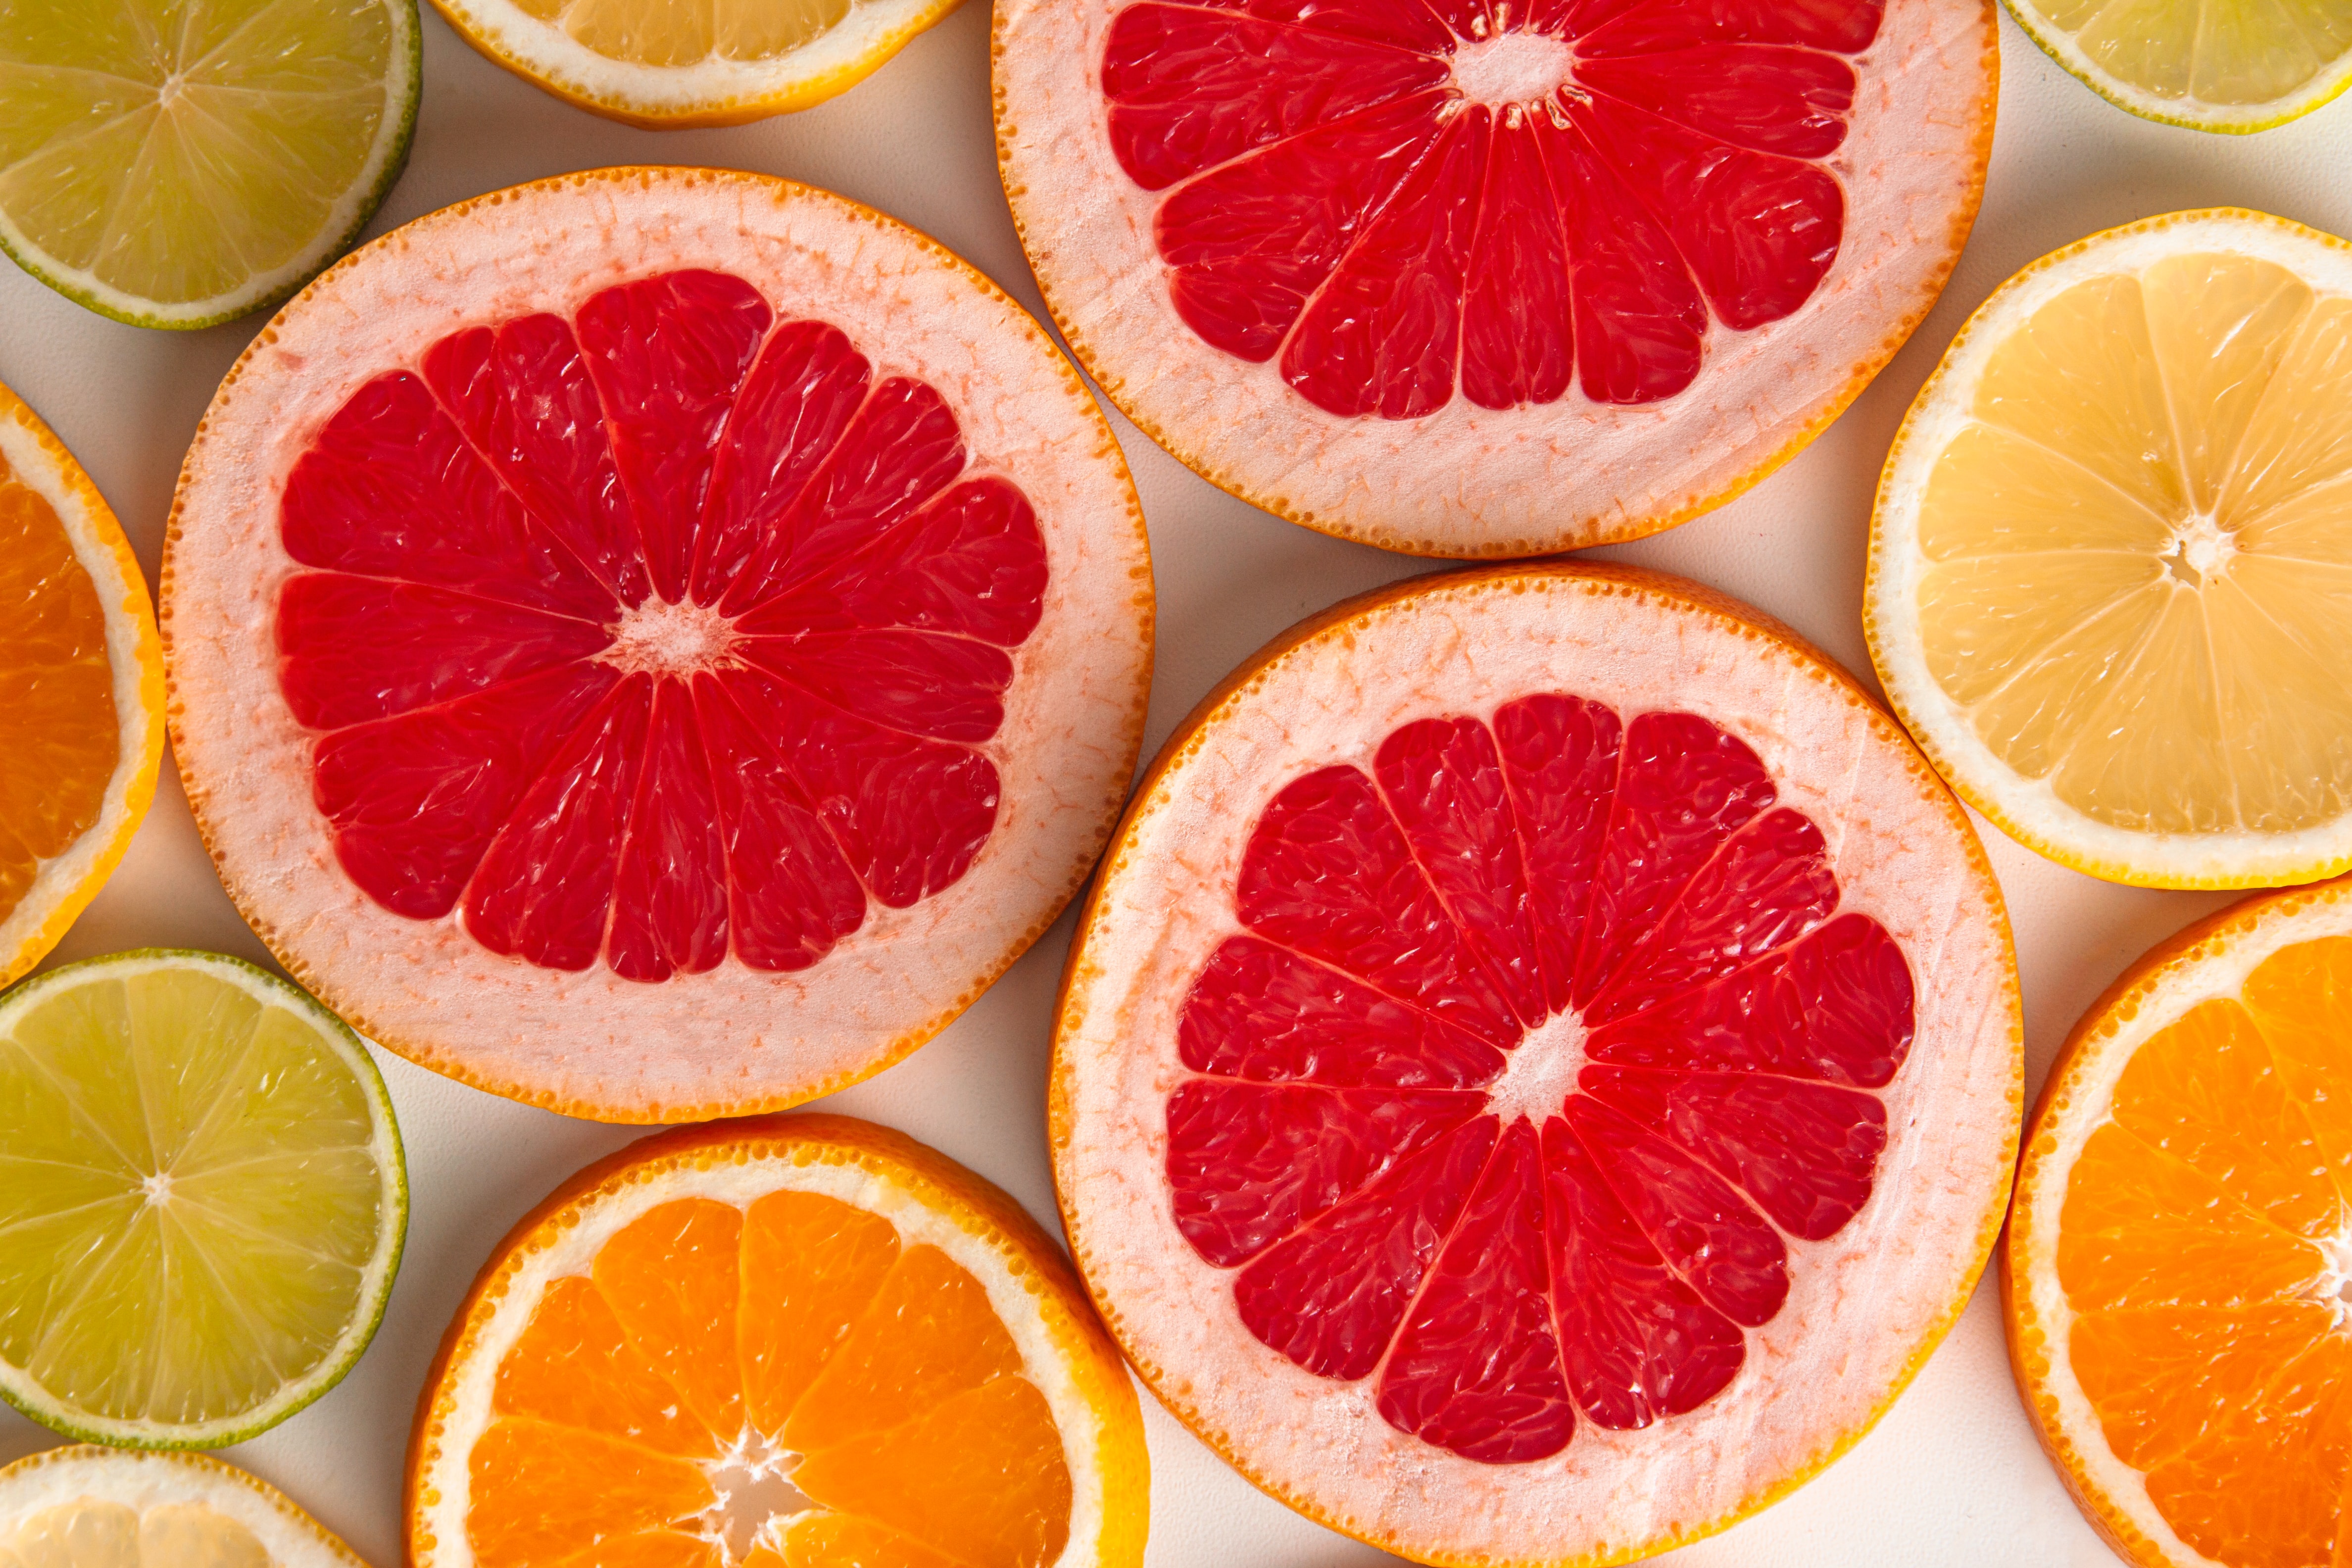 111485 free wallpaper 720x1280 for phone, download images orange, grapefruit, fruits, citrus 720x1280 for mobile